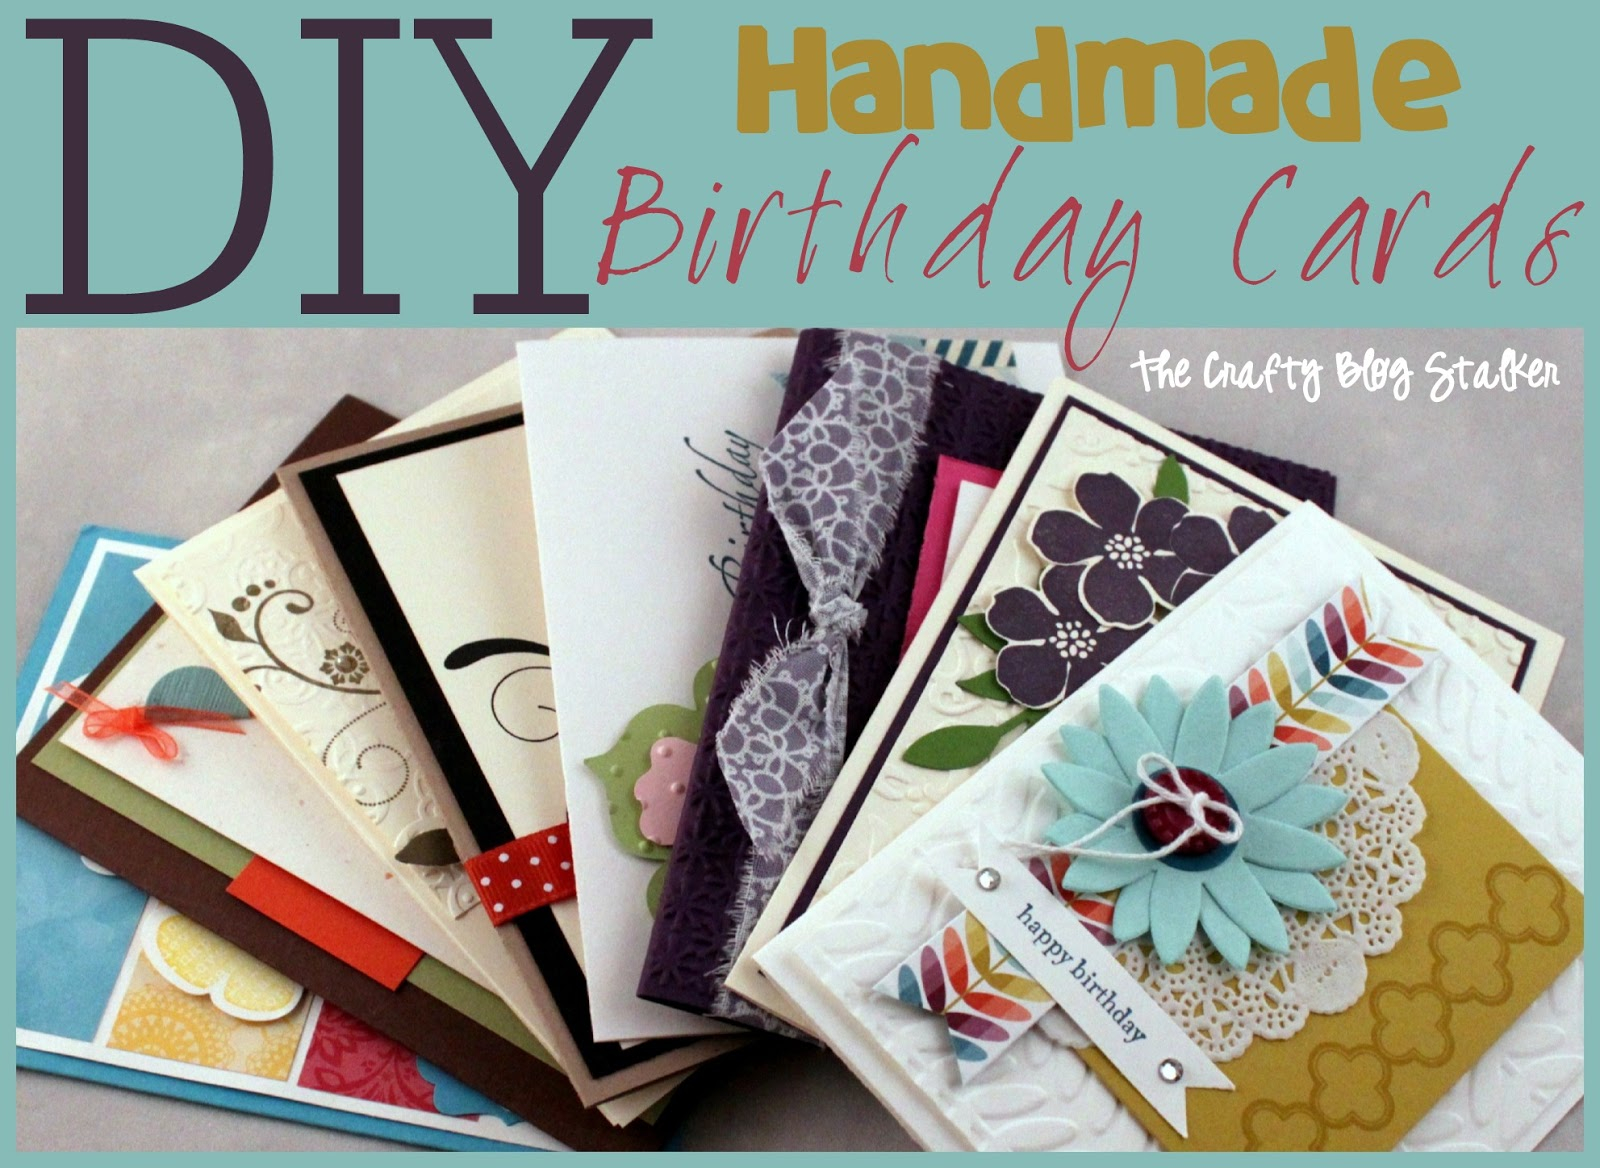 Card Design Ideas For Birthdays Handmade Birthday Card Ideas The Crafty Blog Stalker